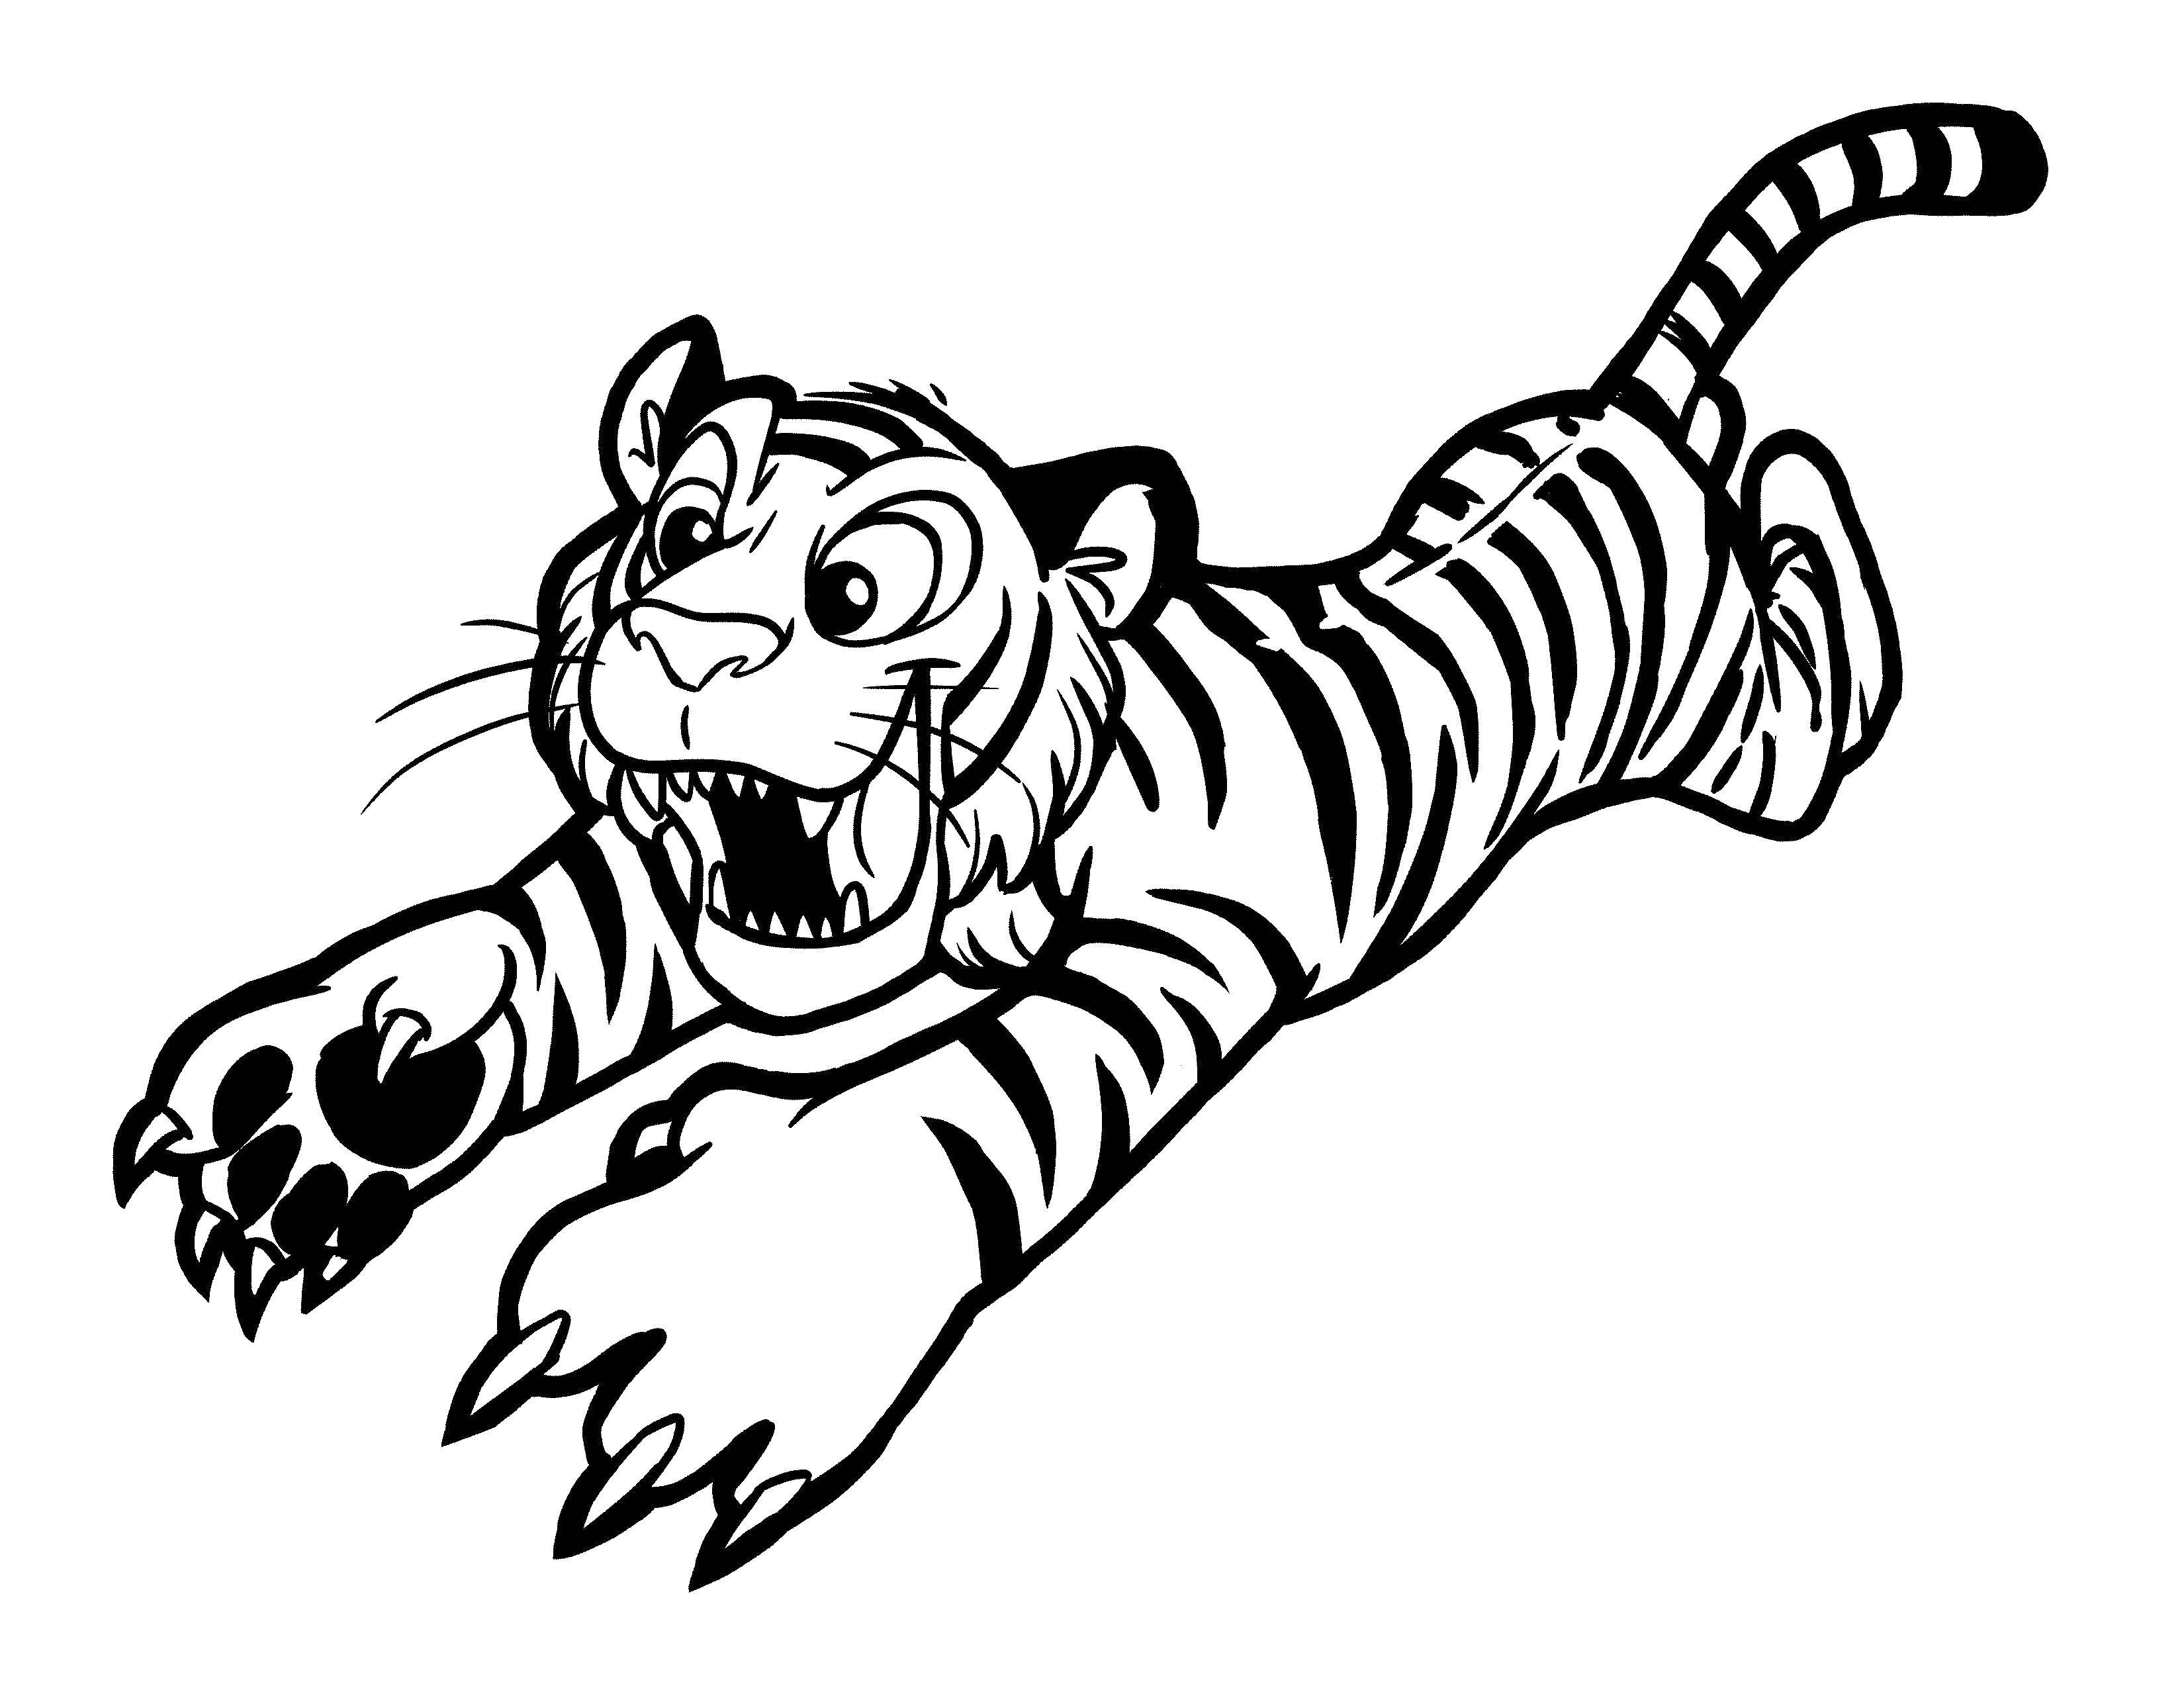 Розмальовки  Тигр нападає. Завантажити розмальовку тигр, тварини.  Роздрукувати ,дитинчата тварин,